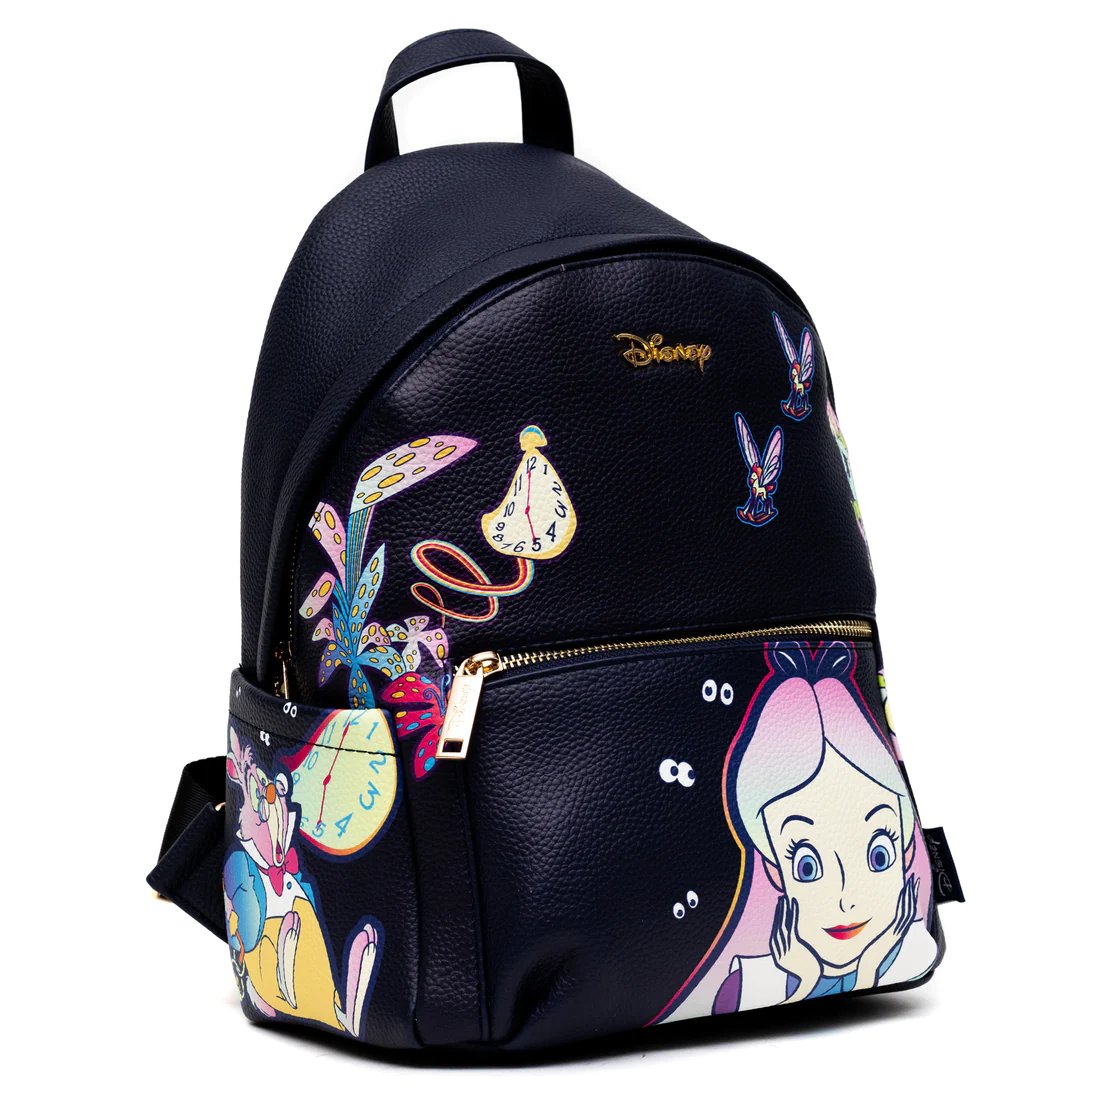 Wondapop High Fashion Disney Alice in Wonderland Mini Backpack